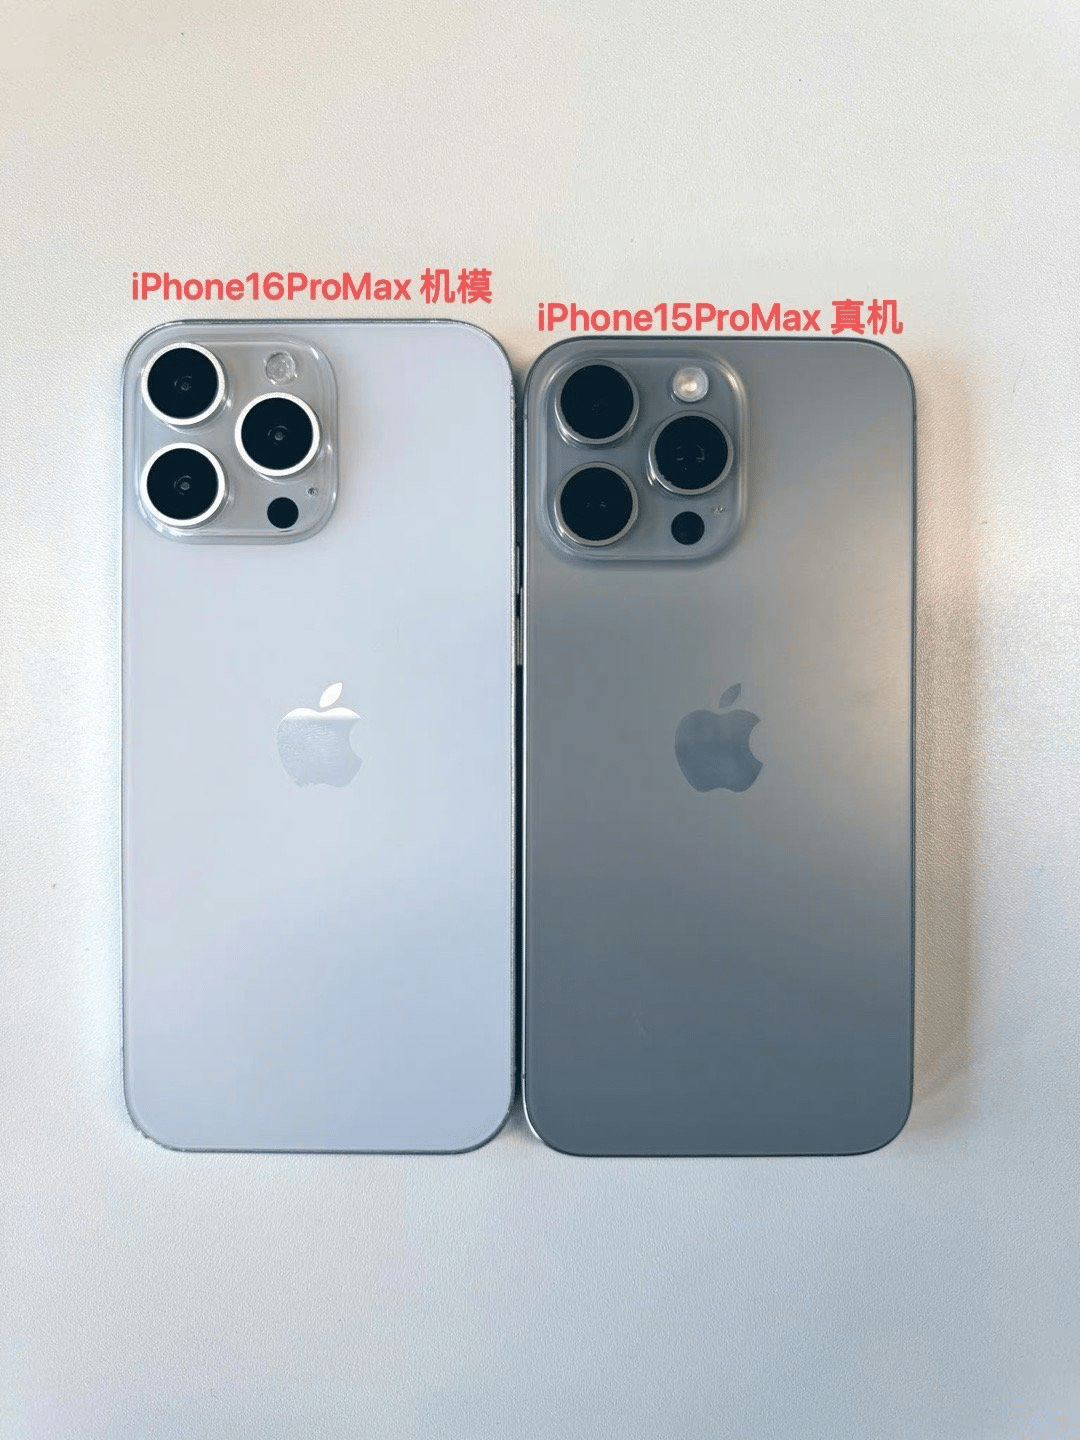 Dummie do iPhone 16 Pro e iPhone 15 Pro Max lado a lado